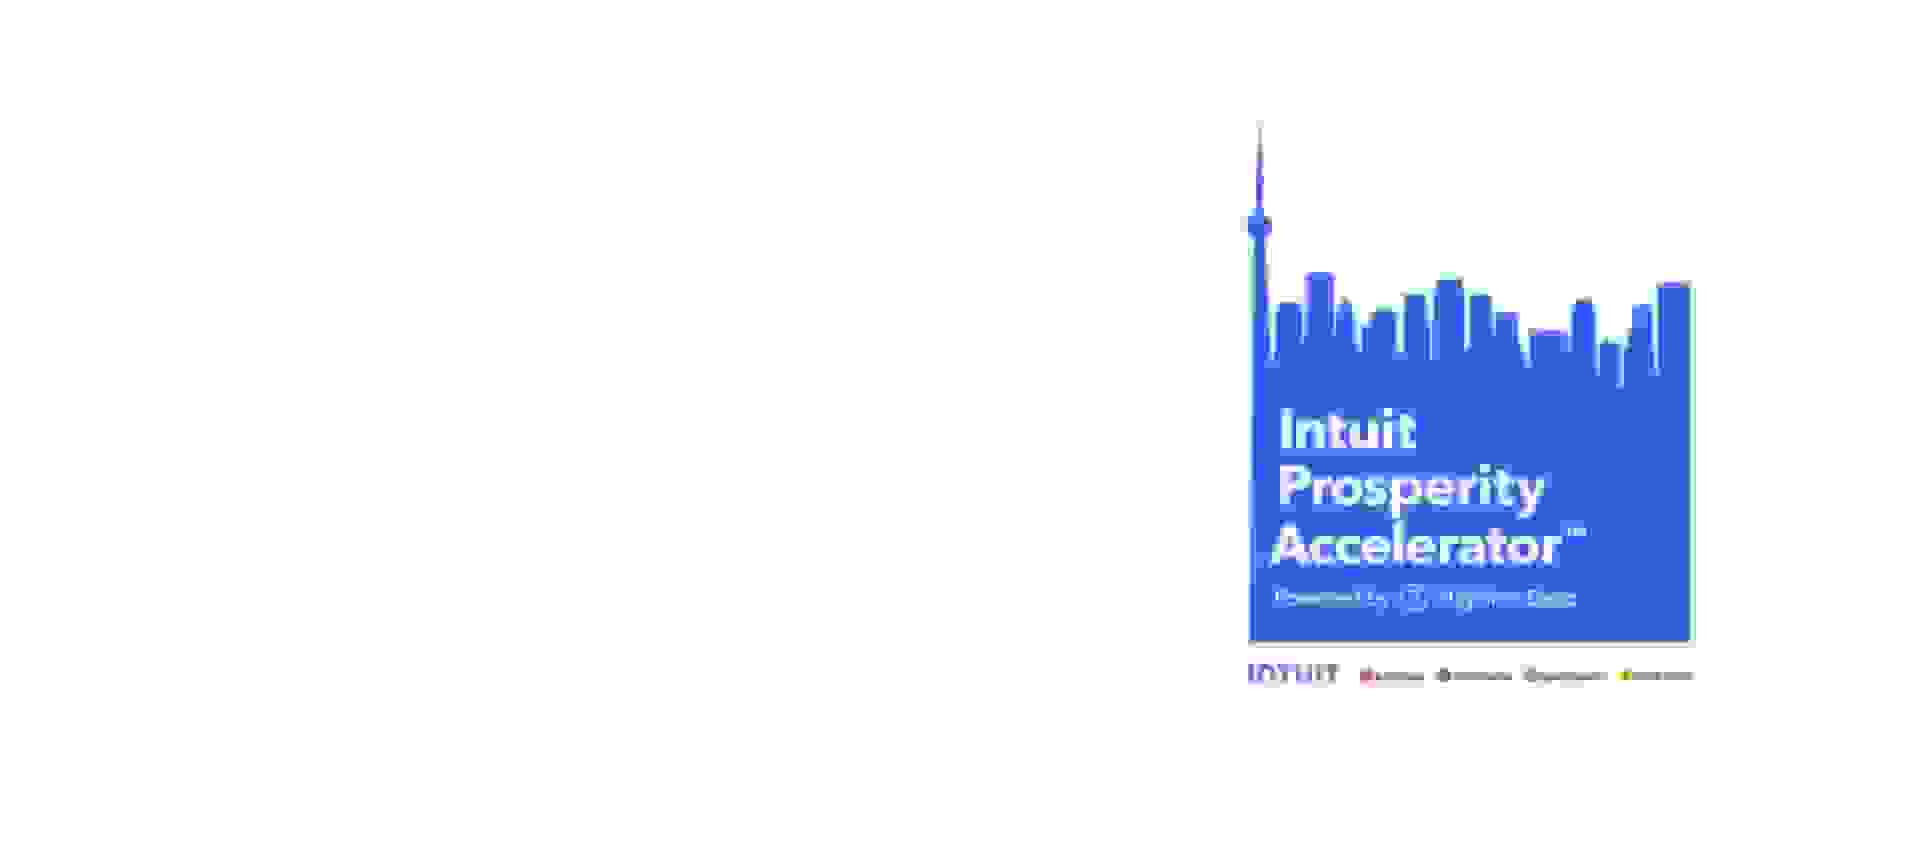 intuit-prosperity-accelerator-herowhite-hq3-logo-icom-20221110-1920x864.jpg